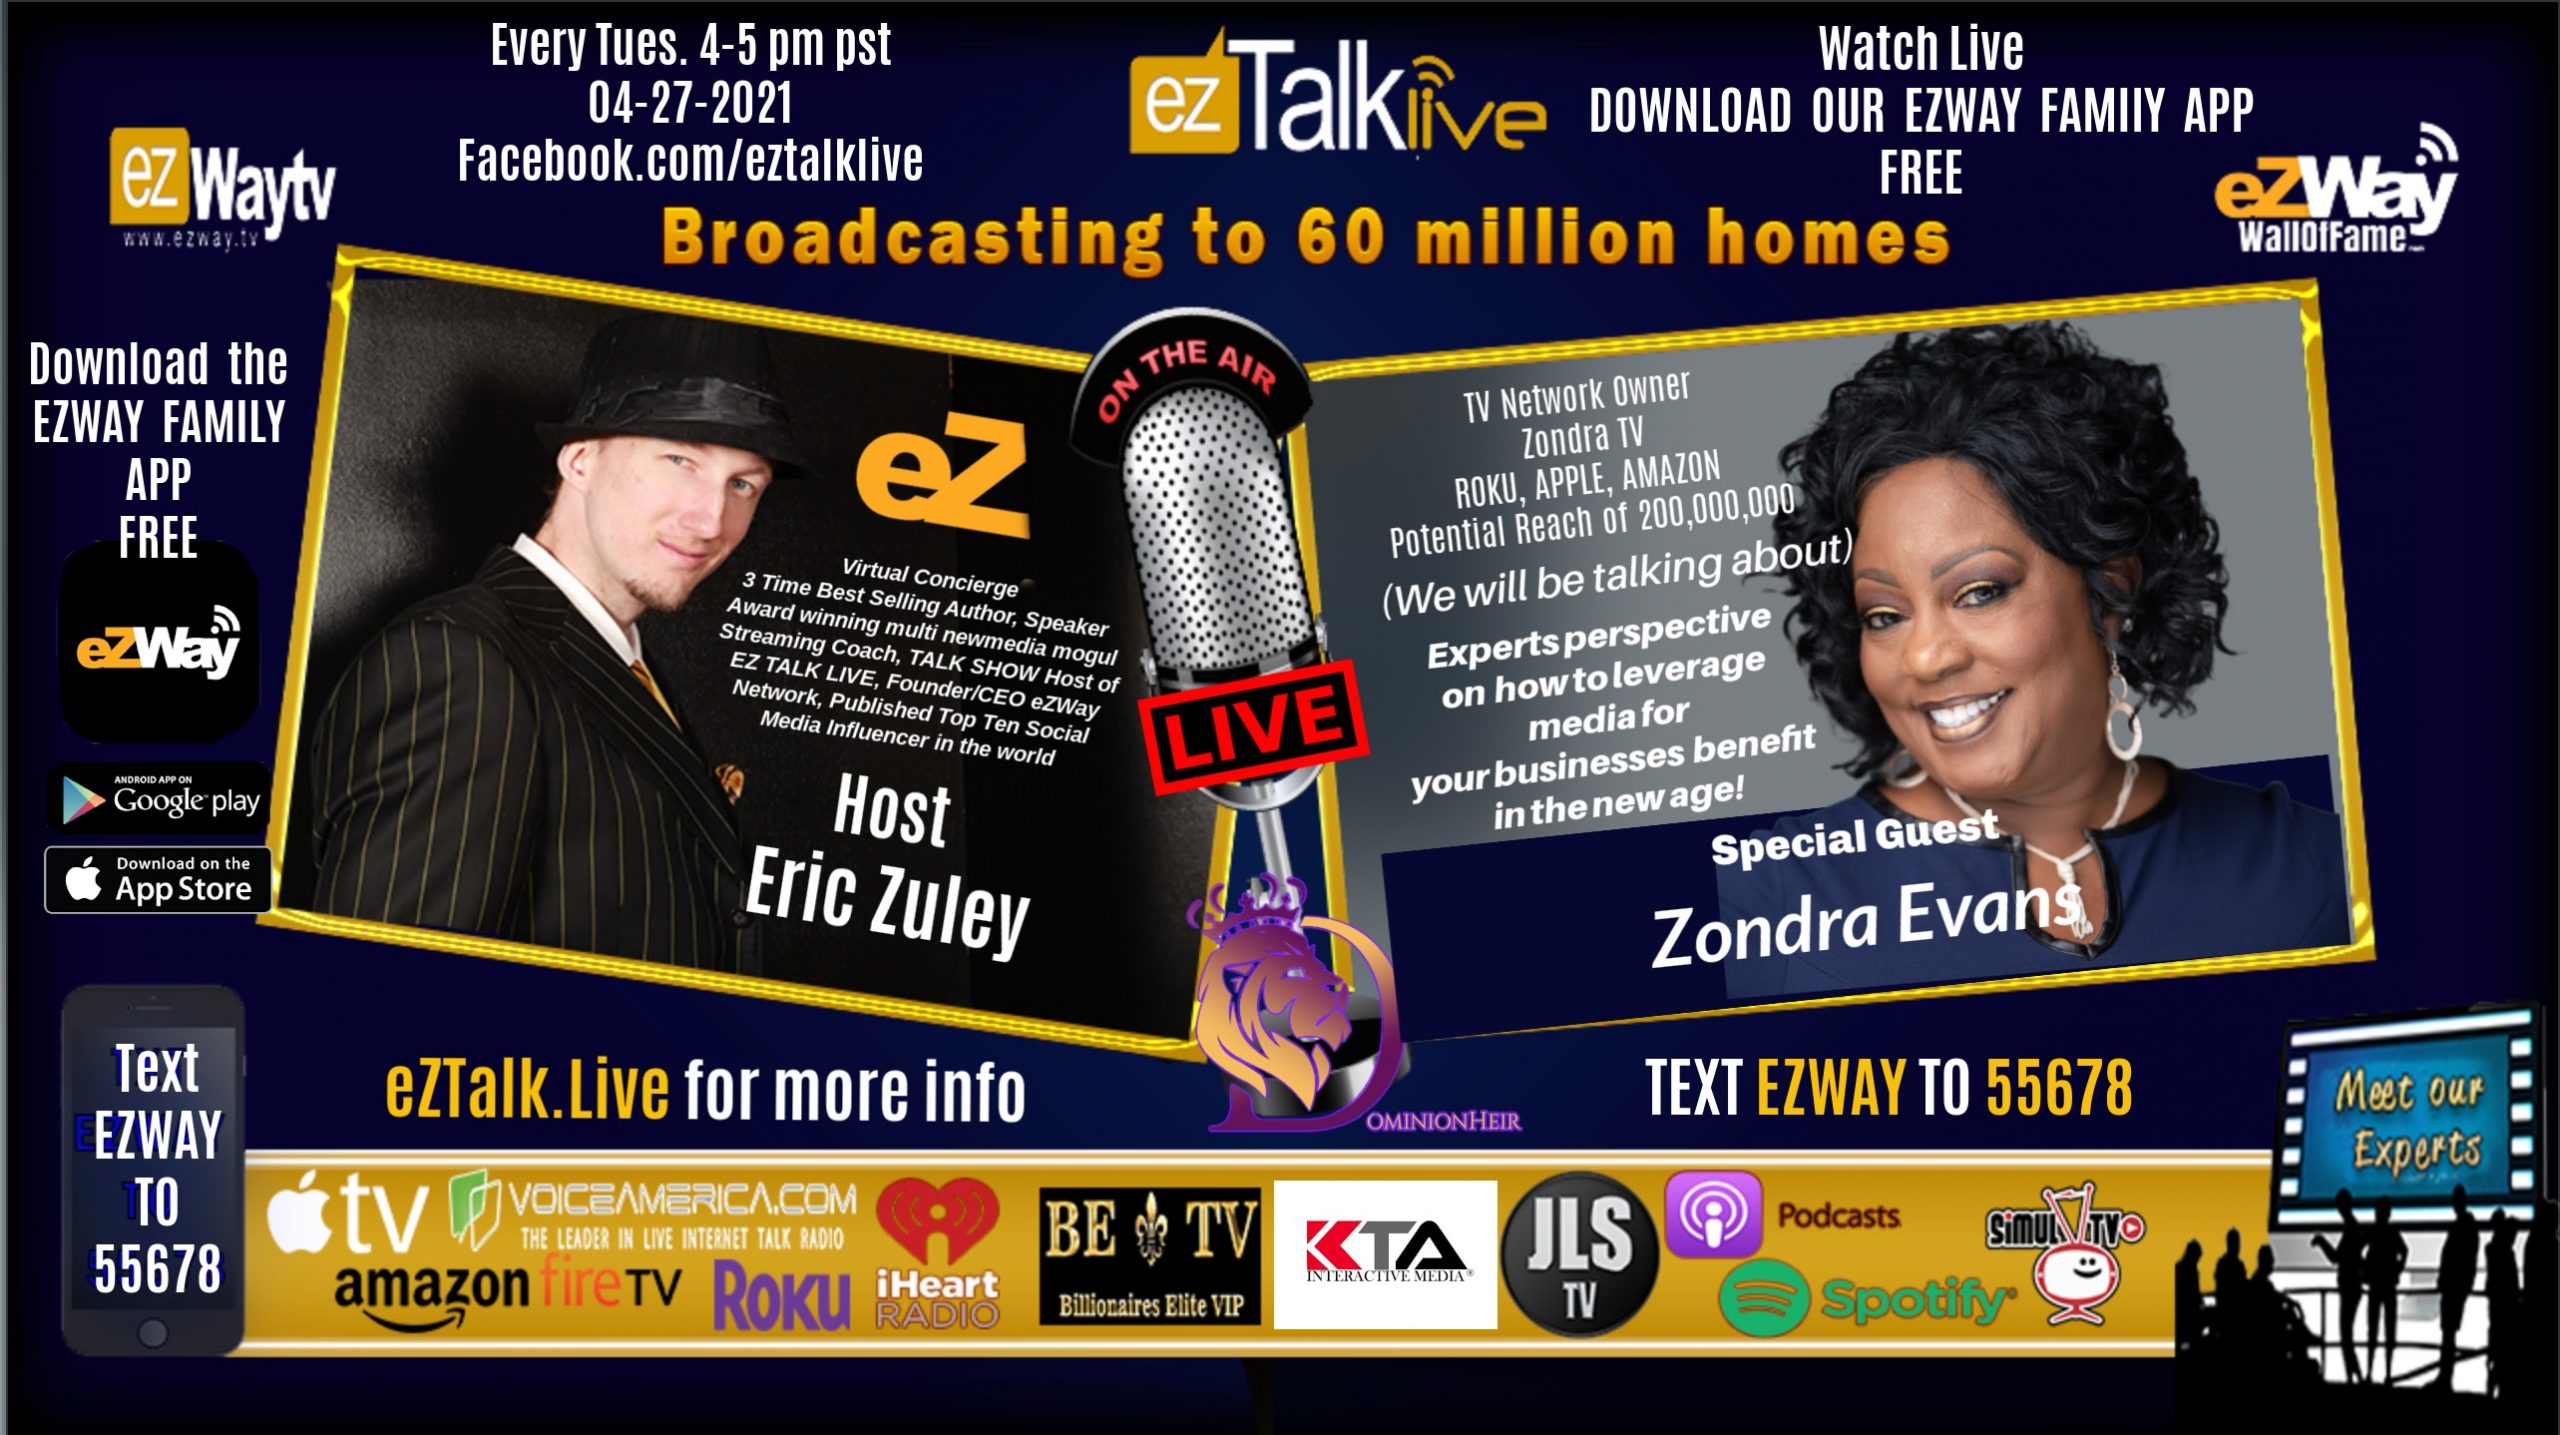 EZ TALK LIVE with Eric Zuley Feat. Distribution Expert Zondra Evans